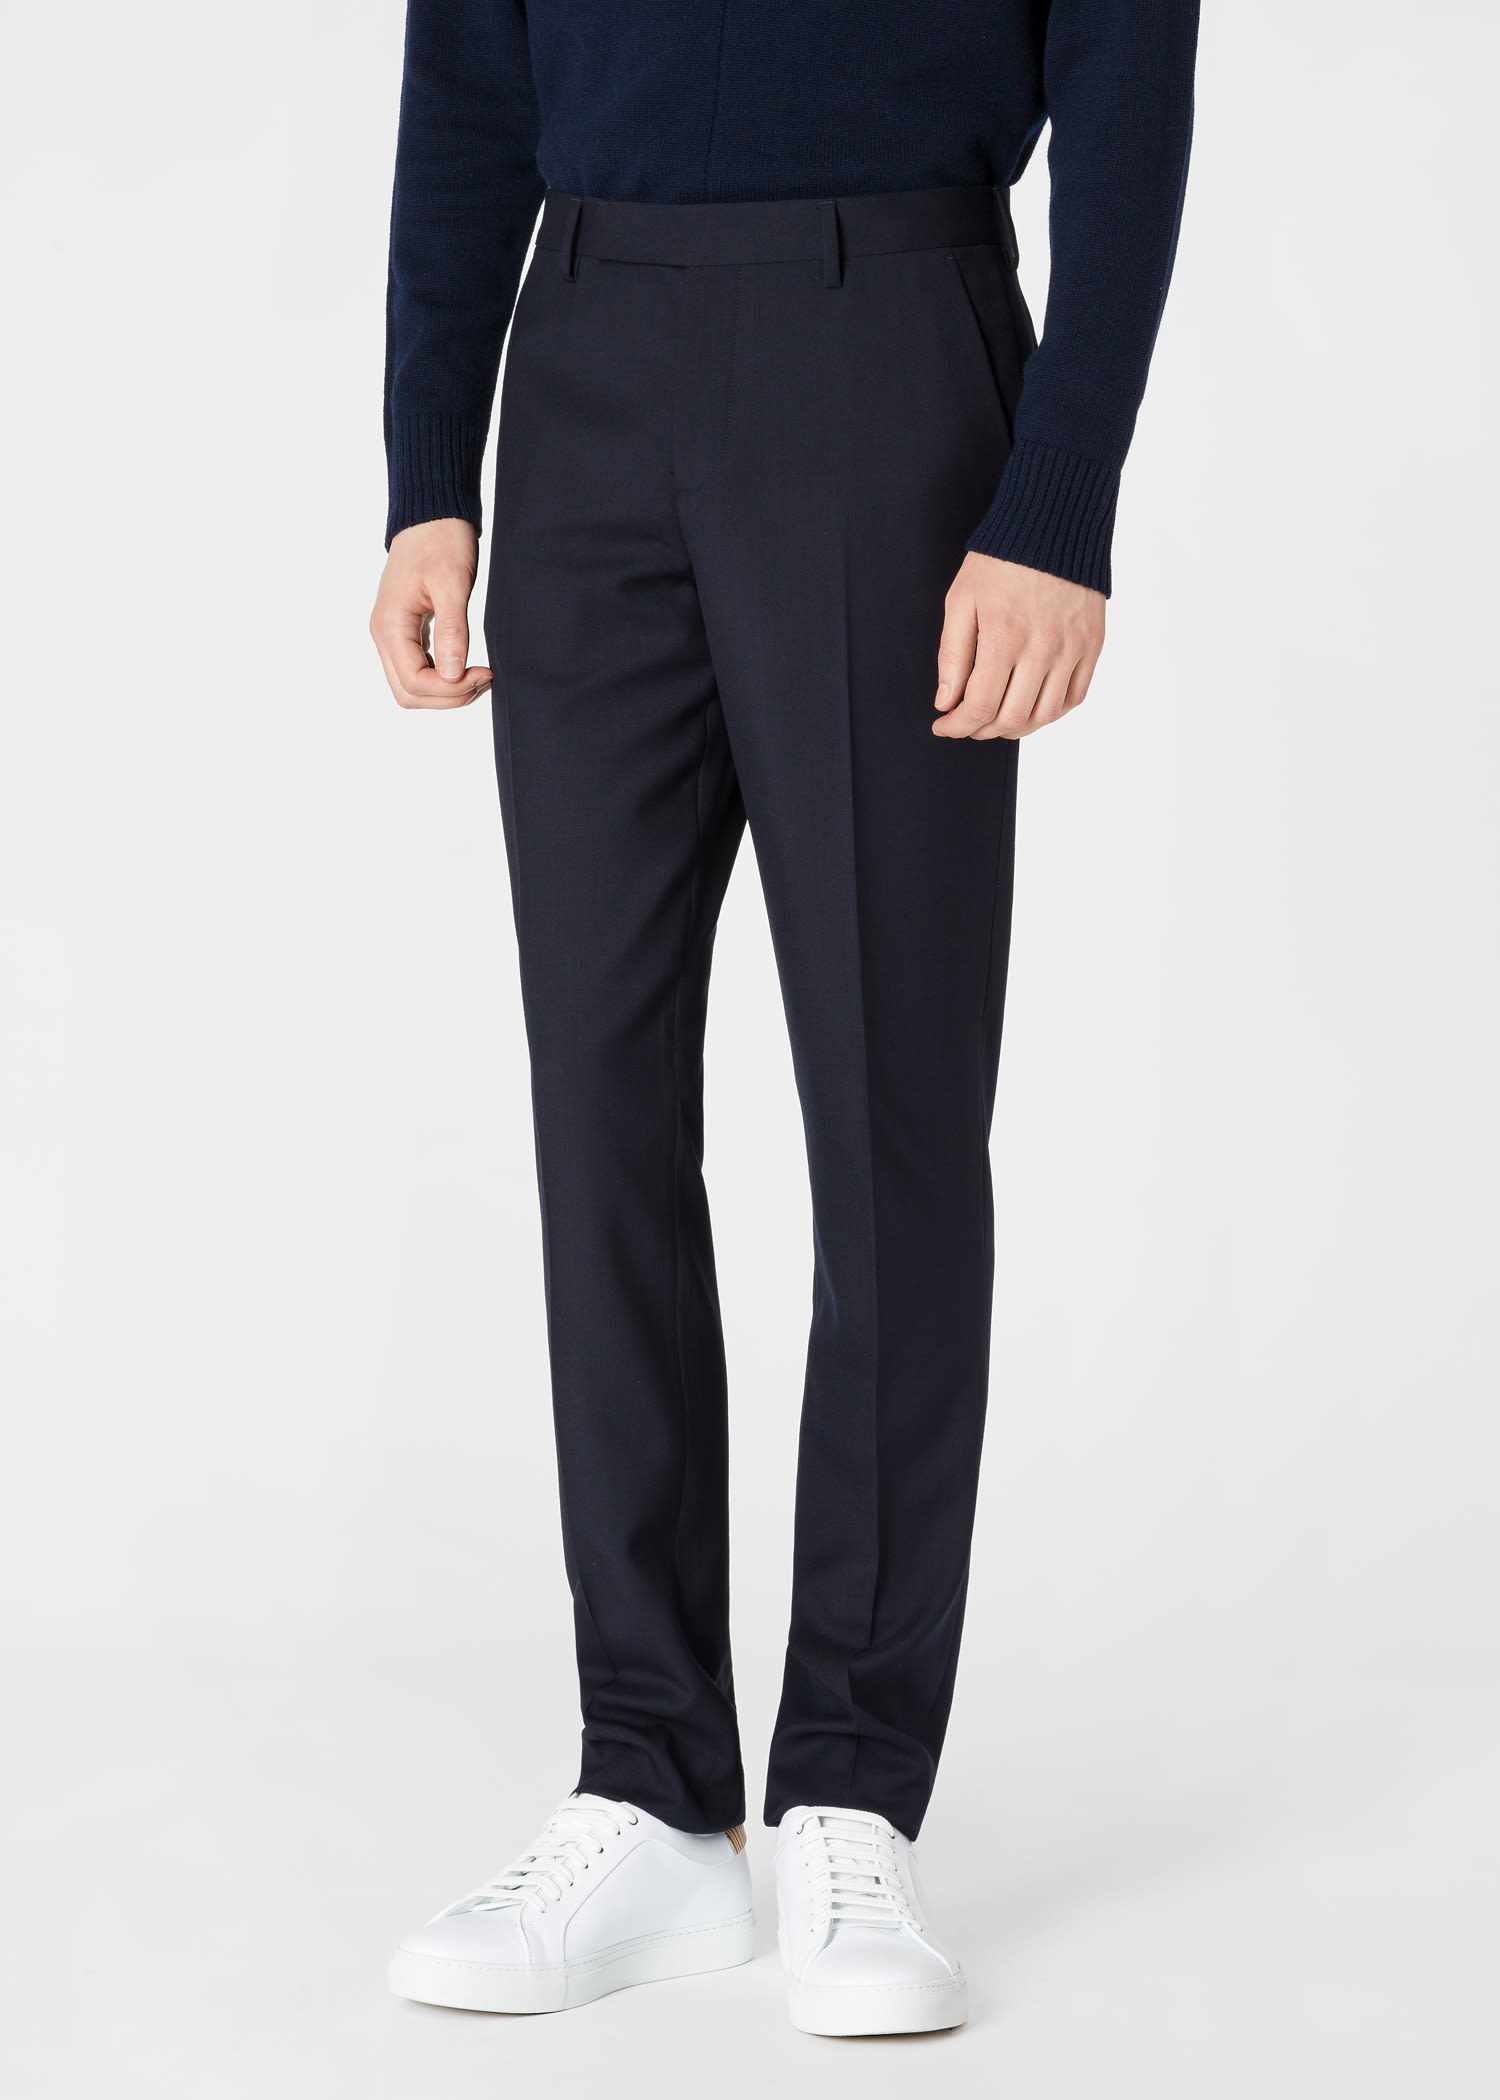 Men's Slim-Fit Navy Wool 'A Suit To Travel In' Pants